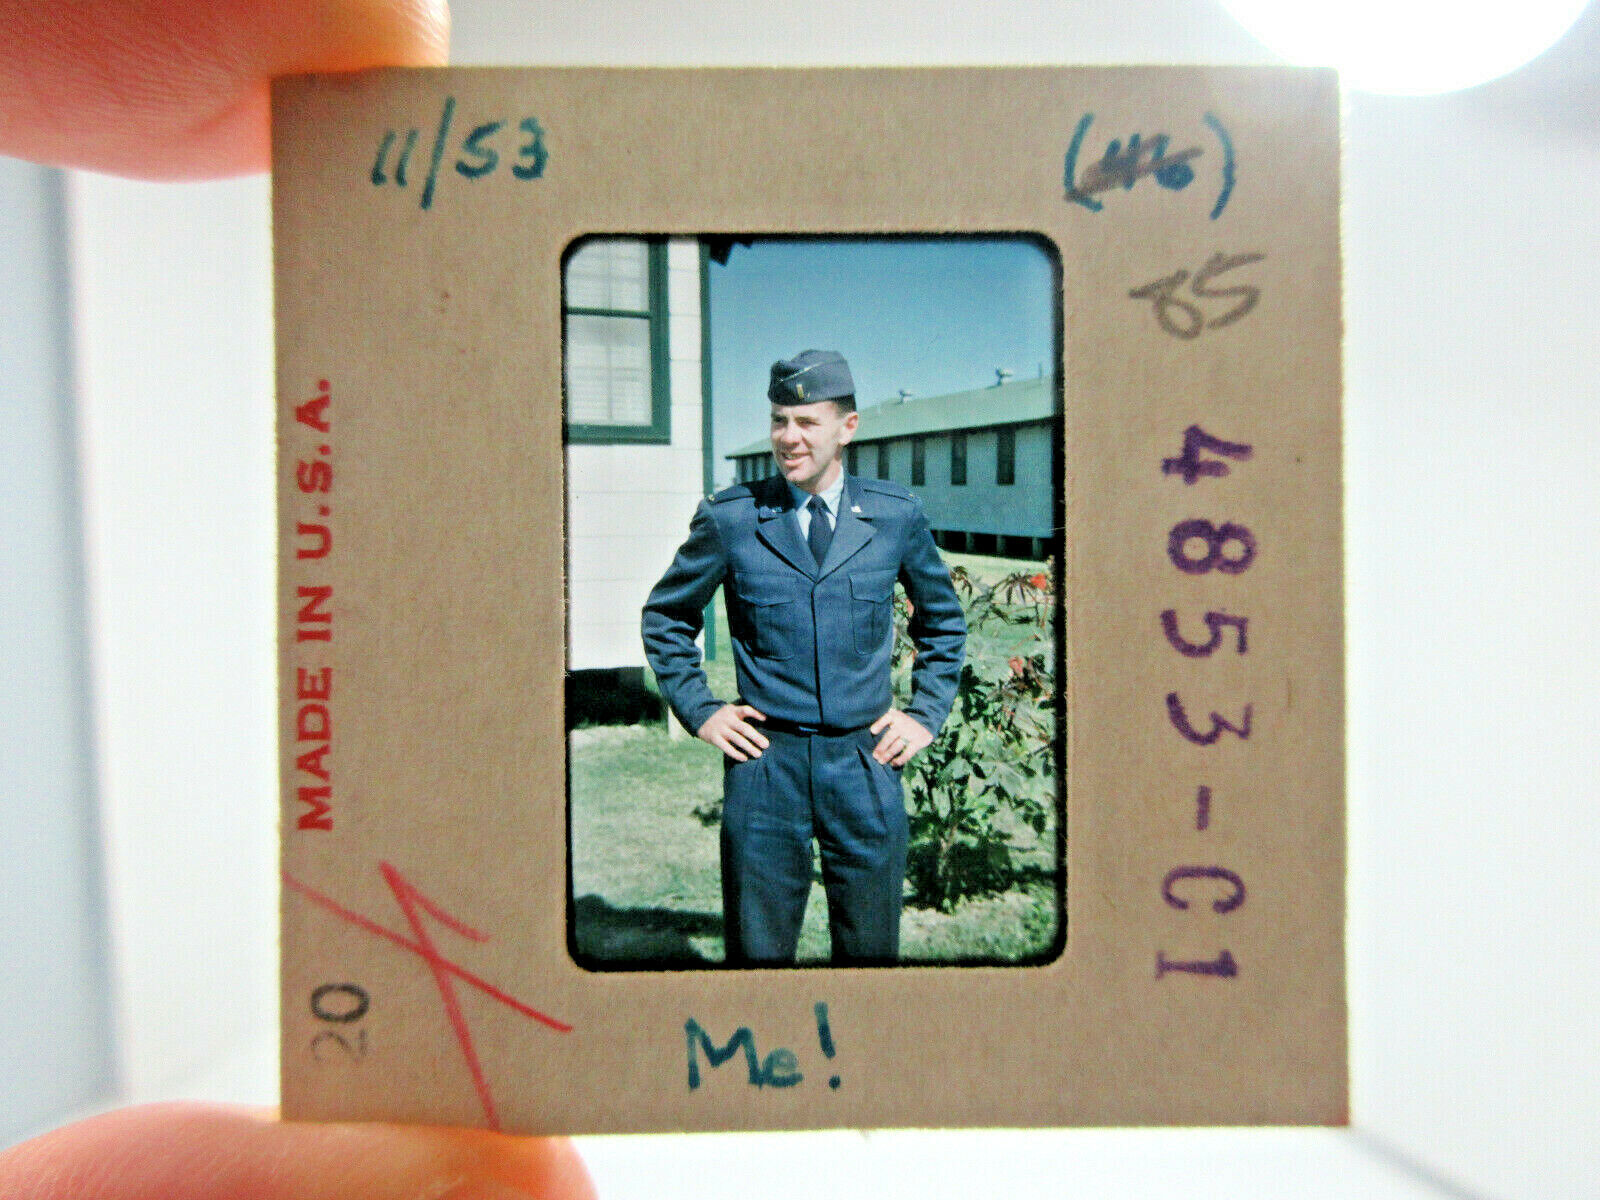 1954 Usaf Air Force Pilot In Uniform Standing Outside Barracks Photo Slide